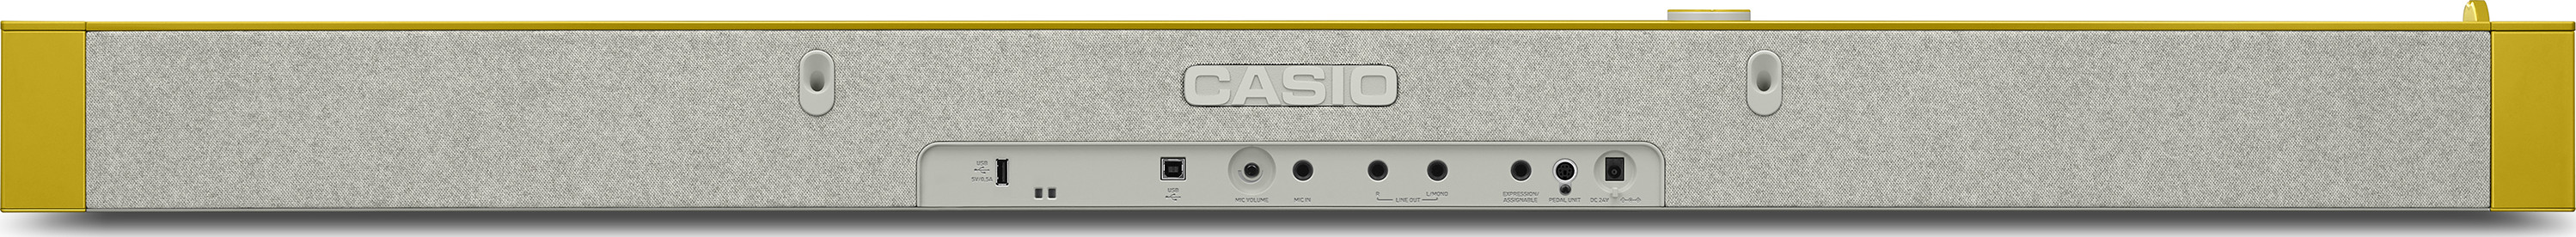 Casio PX-S7000 HM